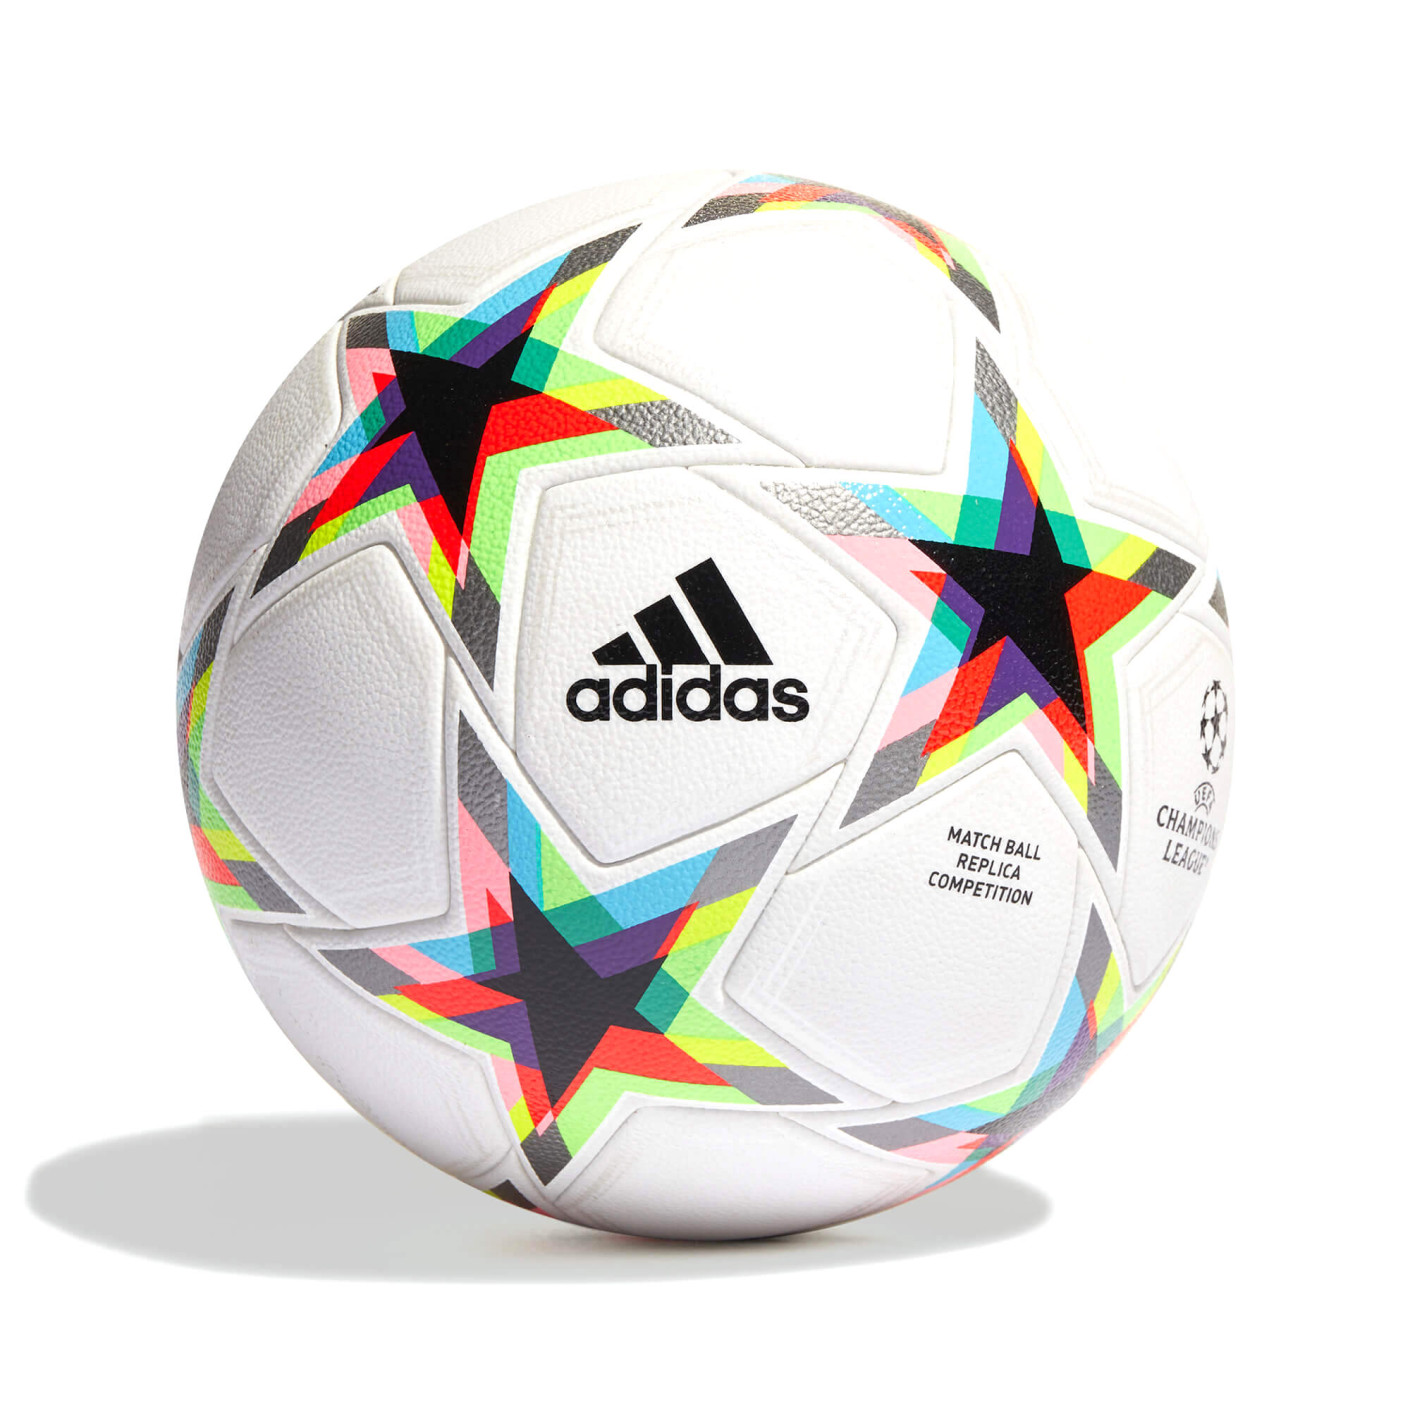 Ballons adidas, UEFA Champions League